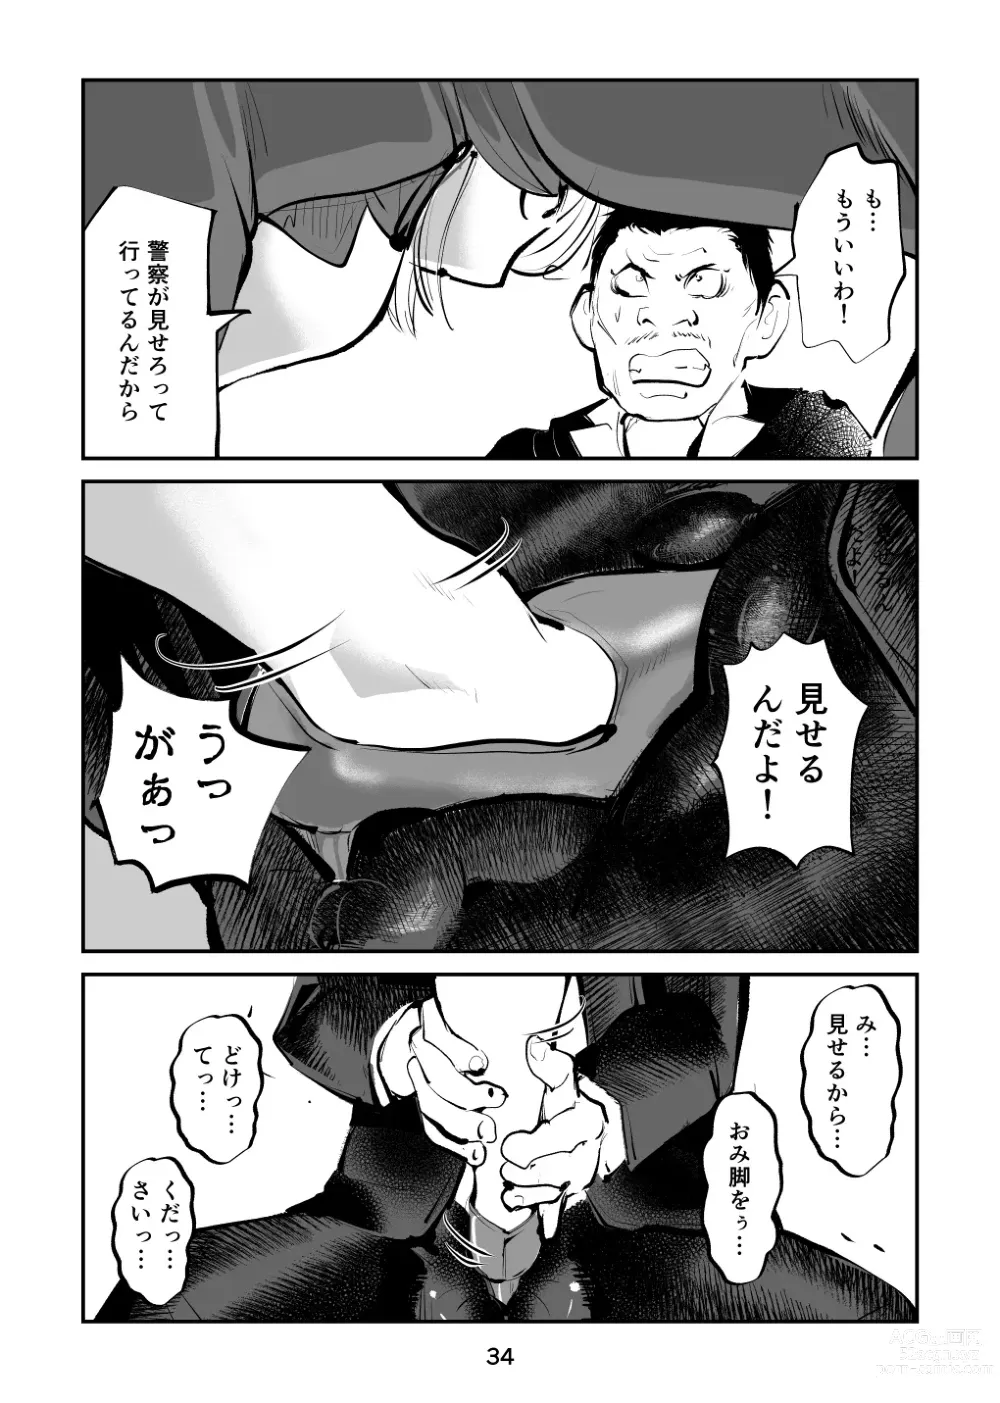 Page 34 of doujinshi Kinkeri onna keiji ryōko